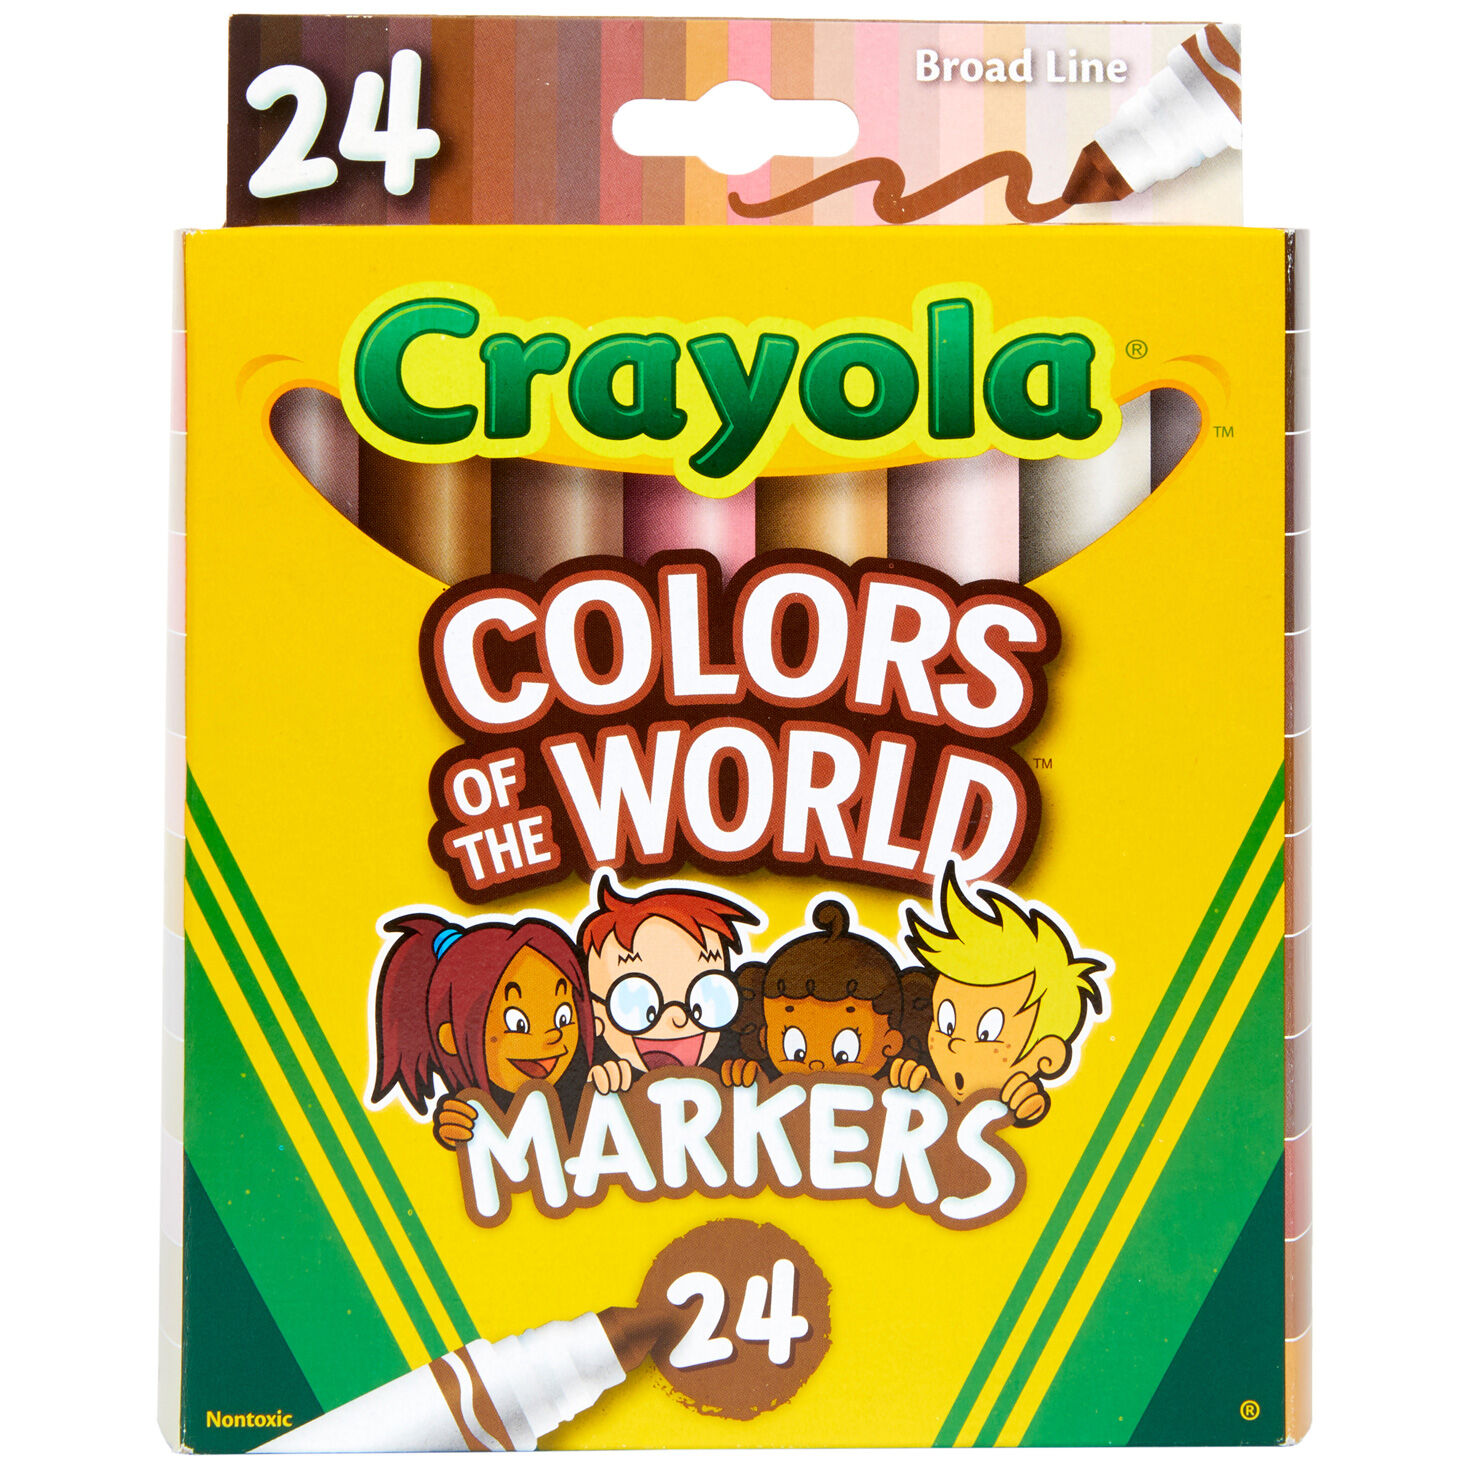 Hallmark Crayola Box of 24-Count Crayons Christmas Ornament